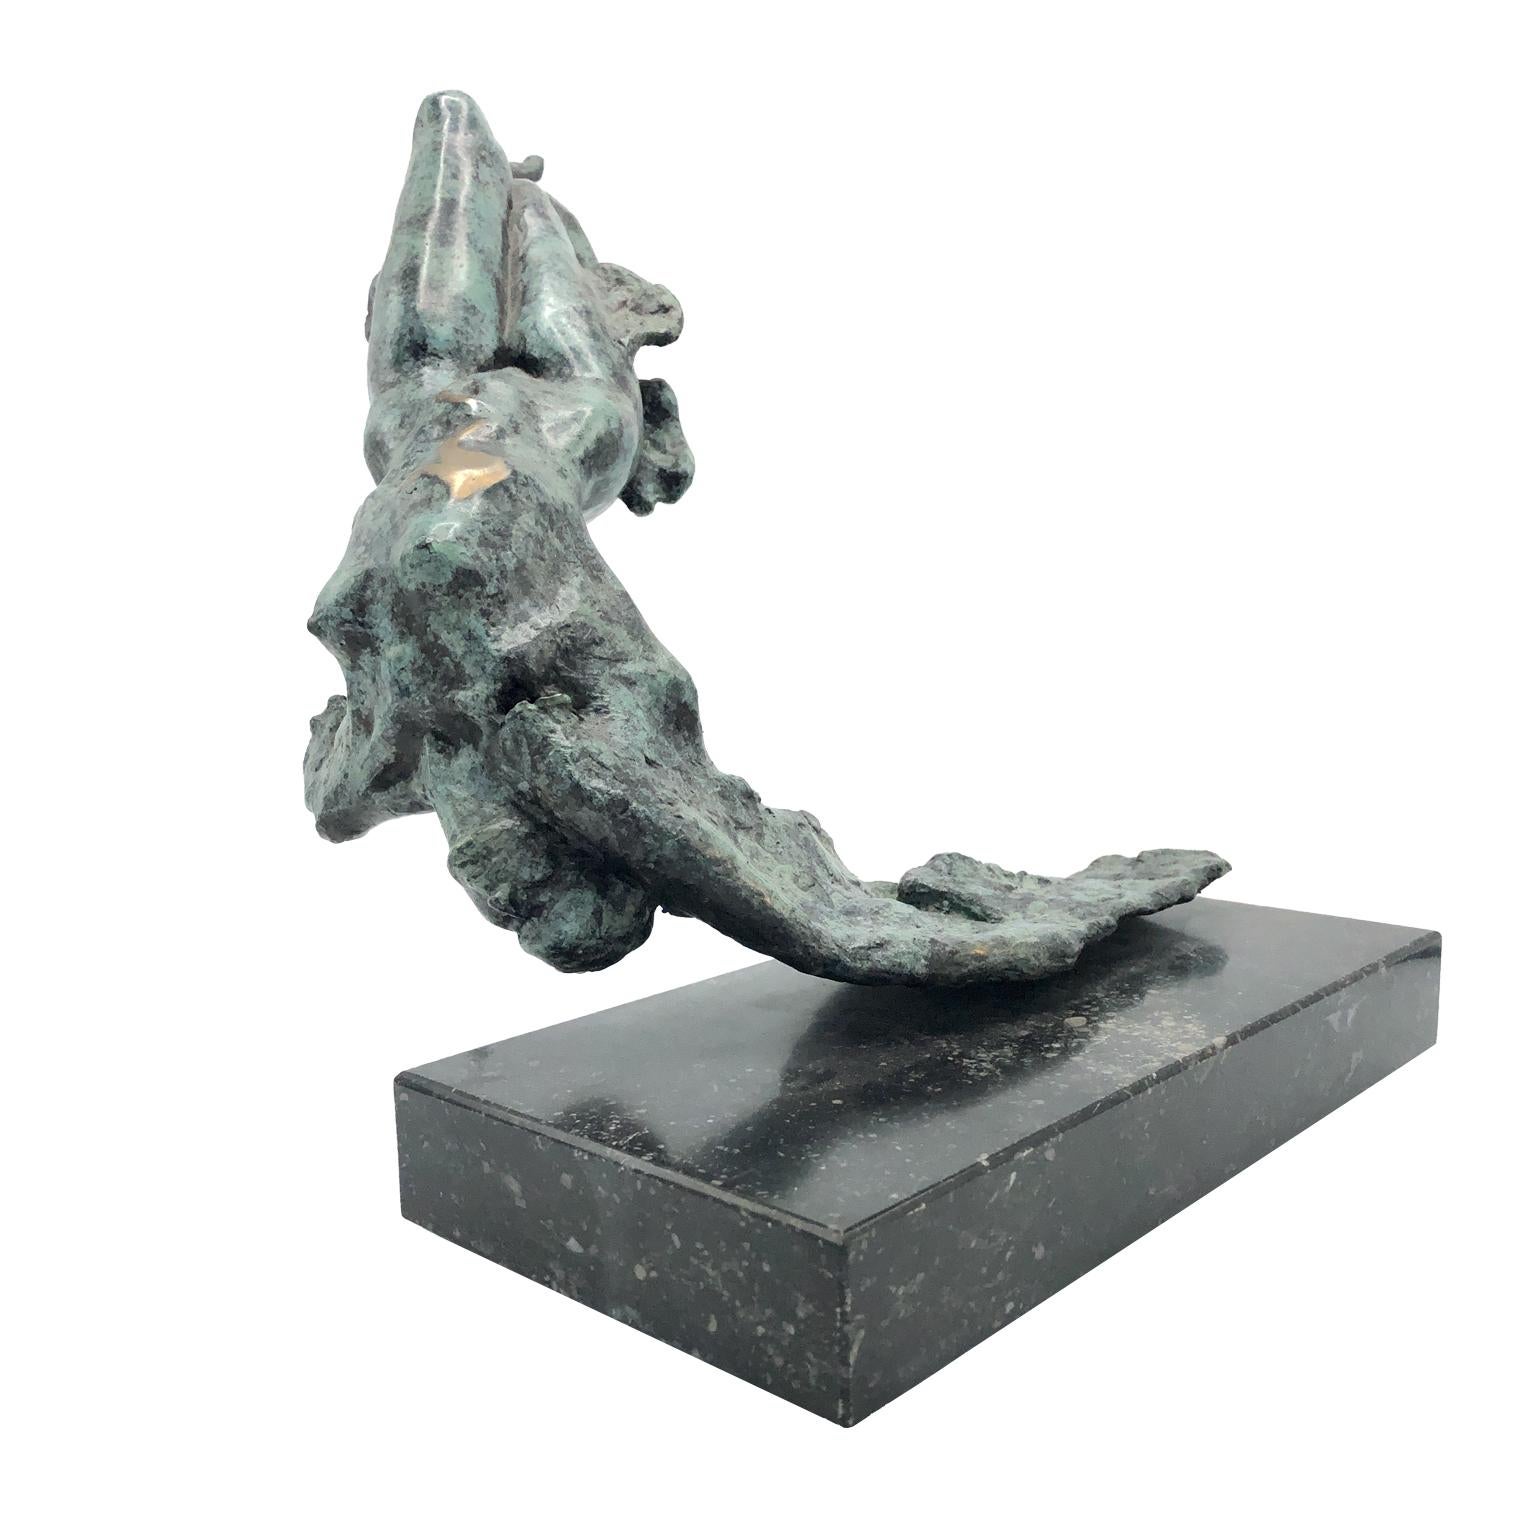 Godfried Dols Figurative Sculpture - Nude Female Figurative Bronze Contemporary Sculpture: Innocenza Perduta